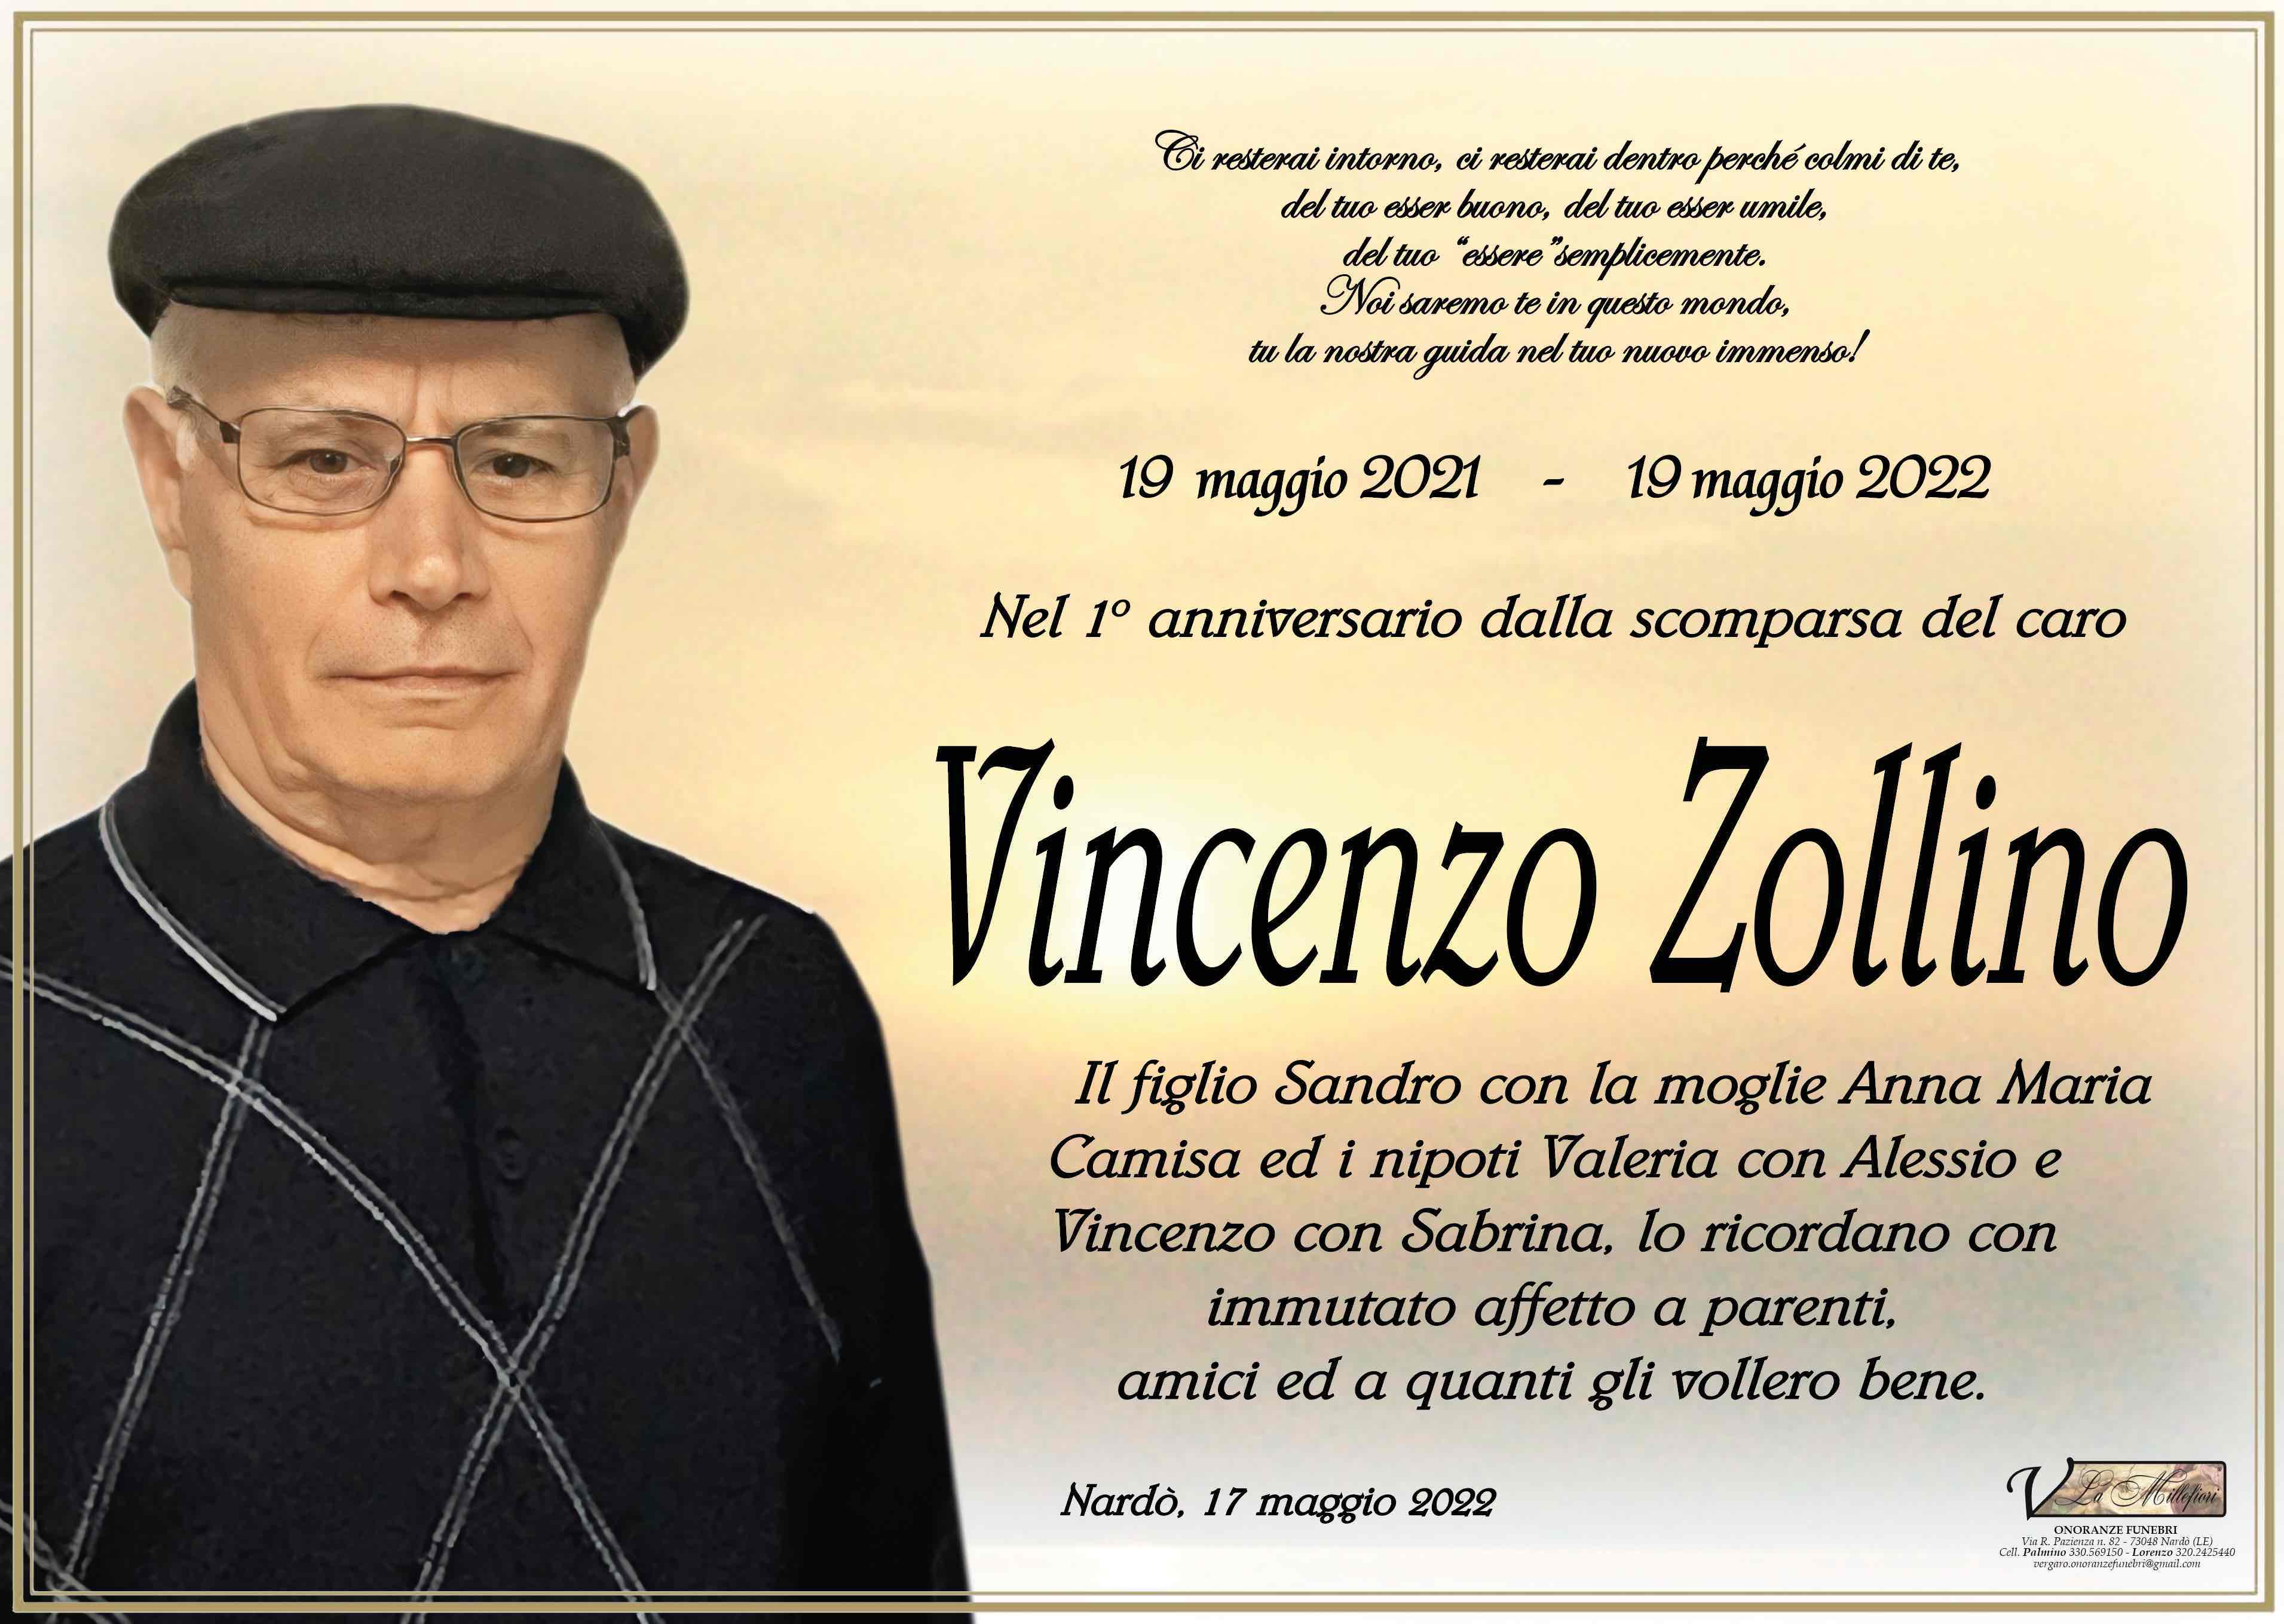 Vincenzo Antonio Zollino